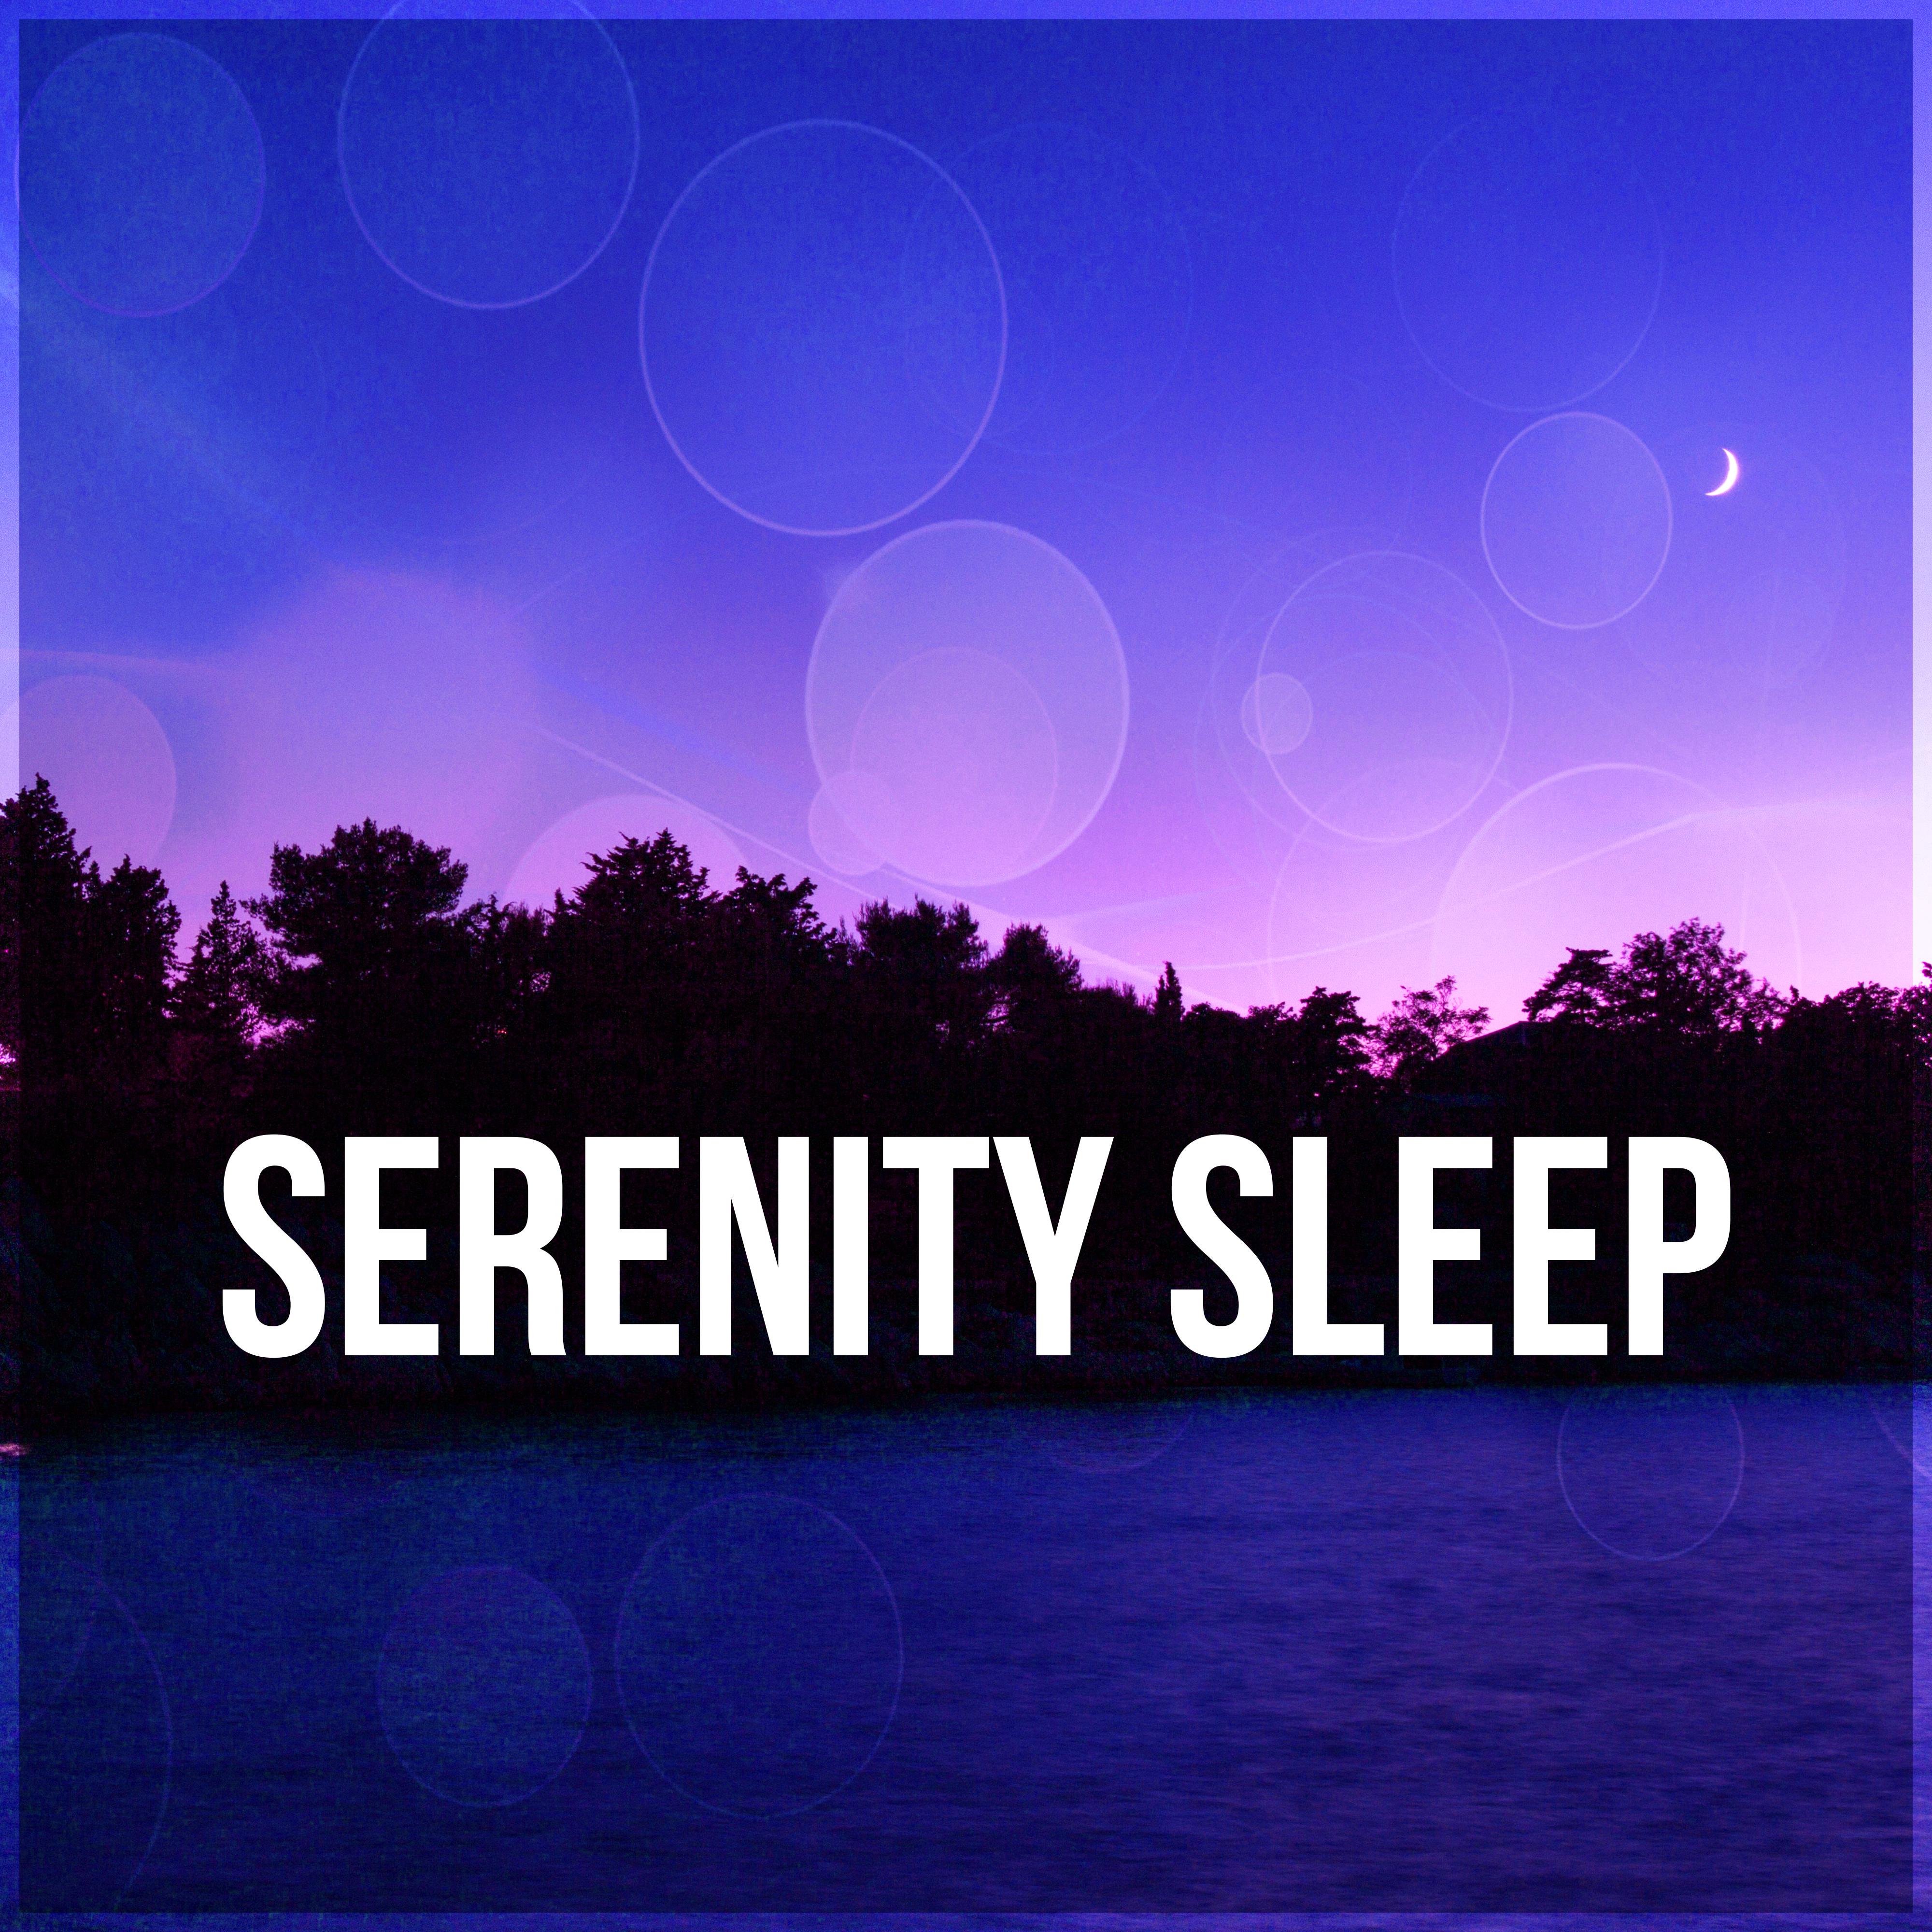 Serenity Sleep  Restful Sleep, Deep Sounds of Nature, Sleep Ambient Sounds, Night Time